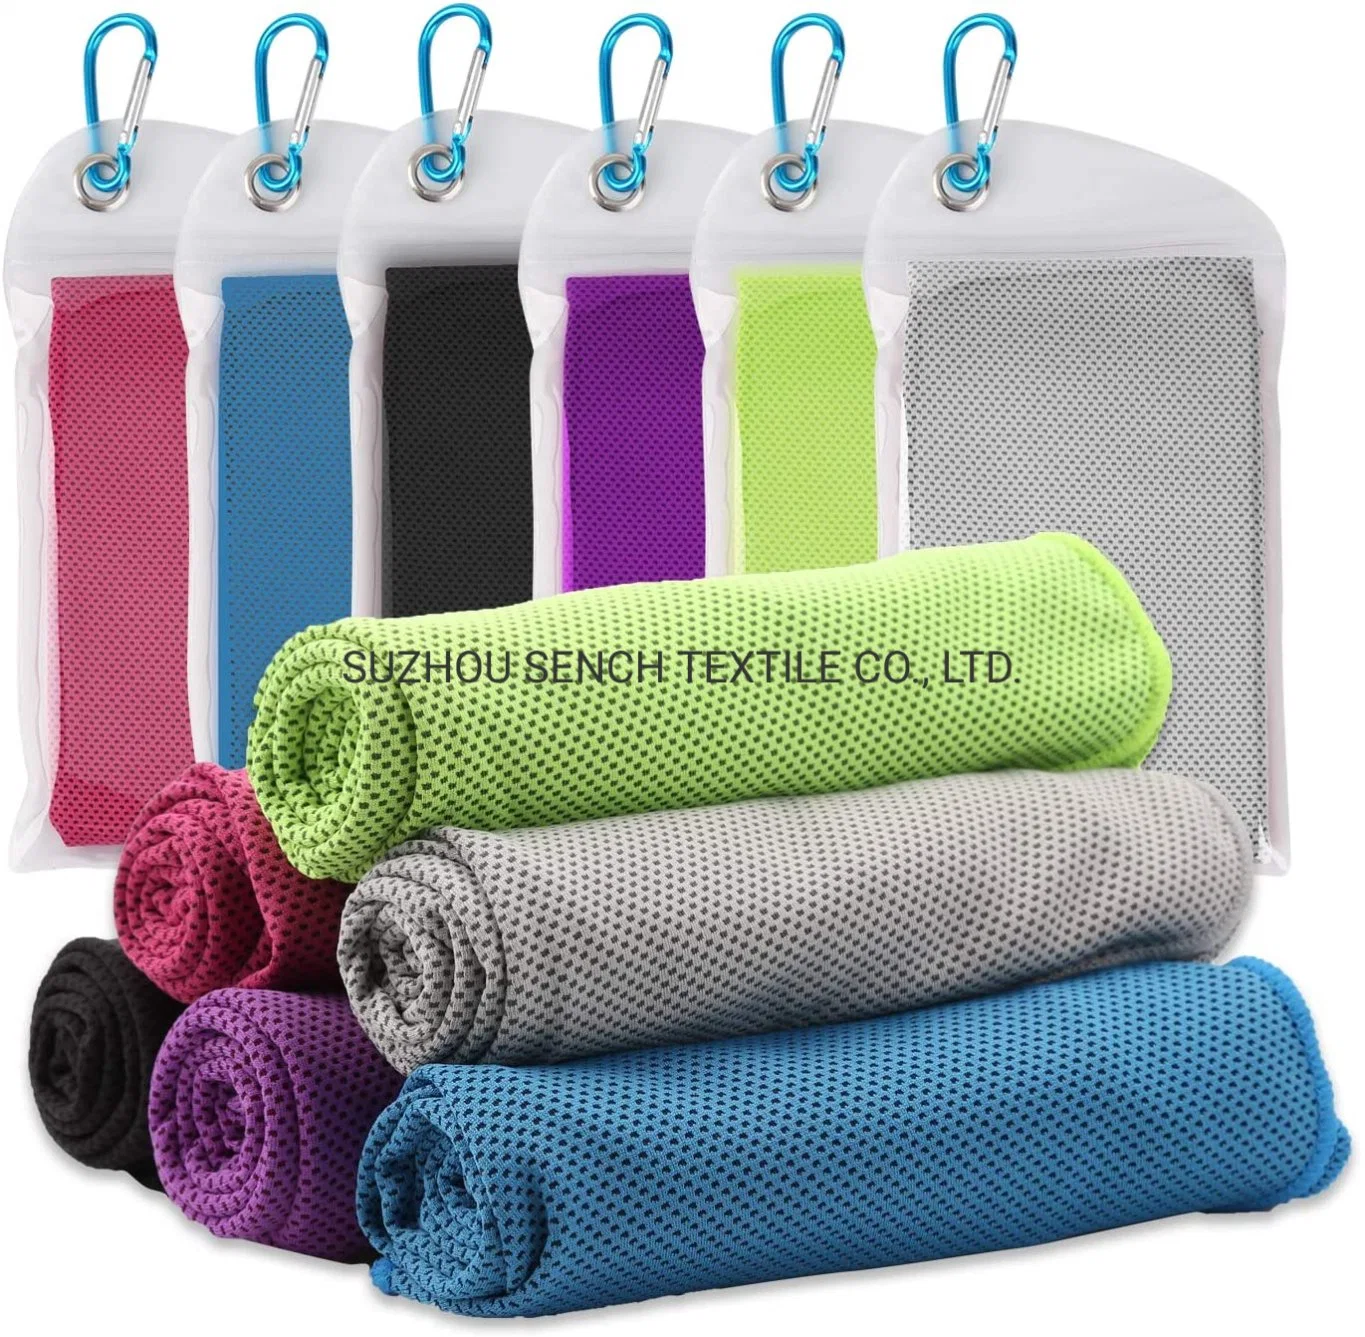 Cooling Towel for Instant Relief, Ice Microfiber Towel, Sports Towel, Gym Towel, Yoga Towel, Camping Towel, Travel Towel, Green Towel